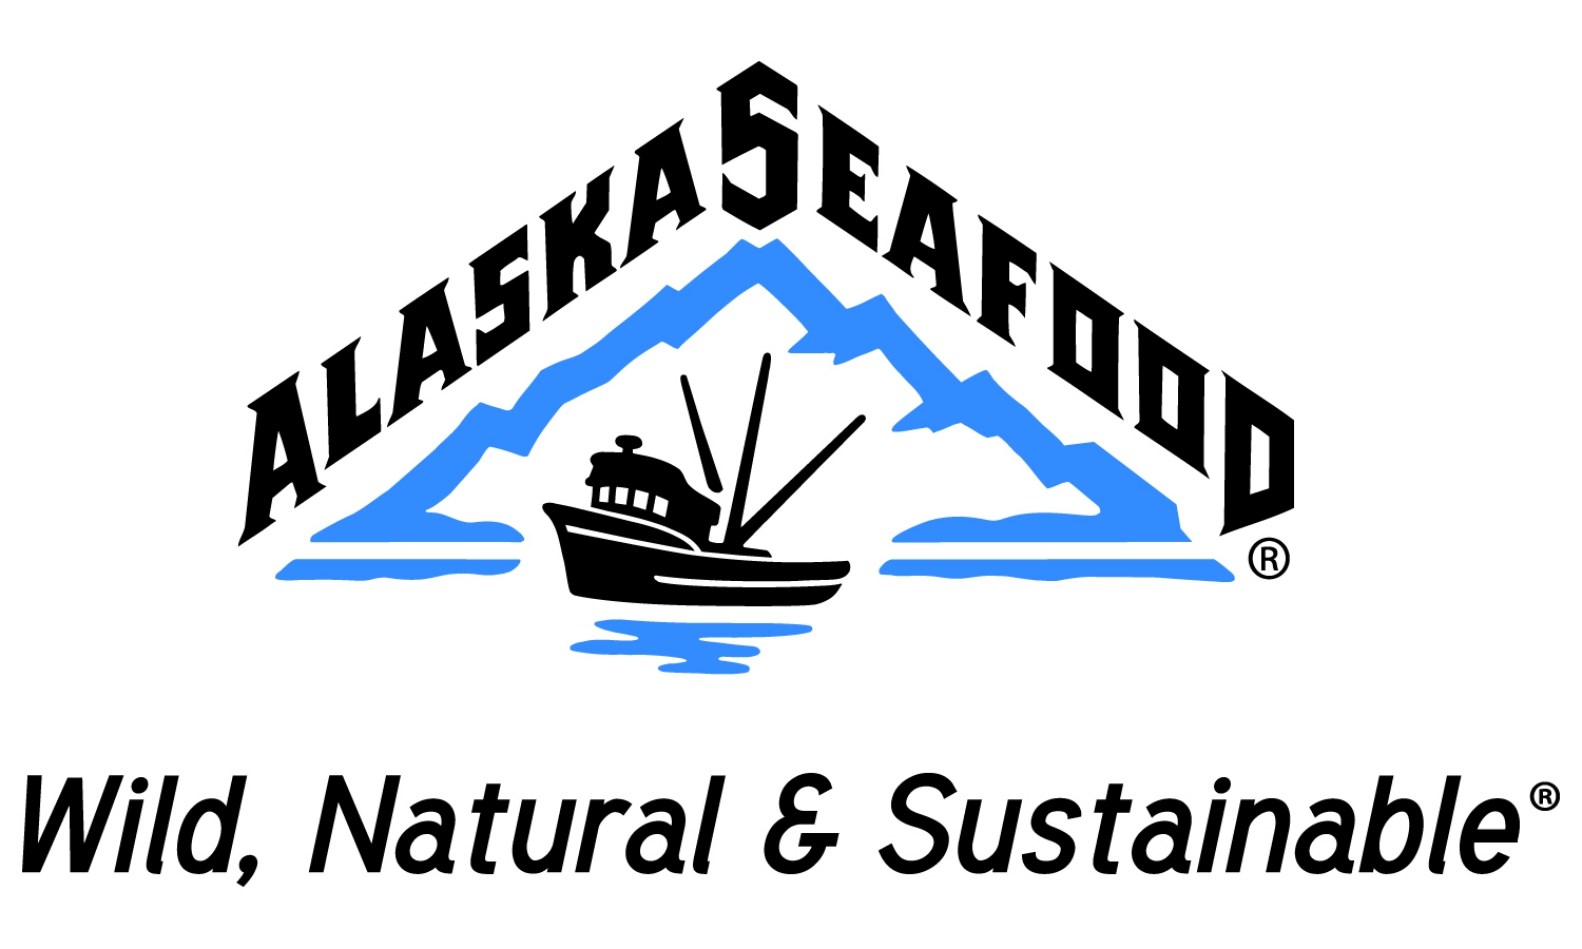 Alaska Seafood logo